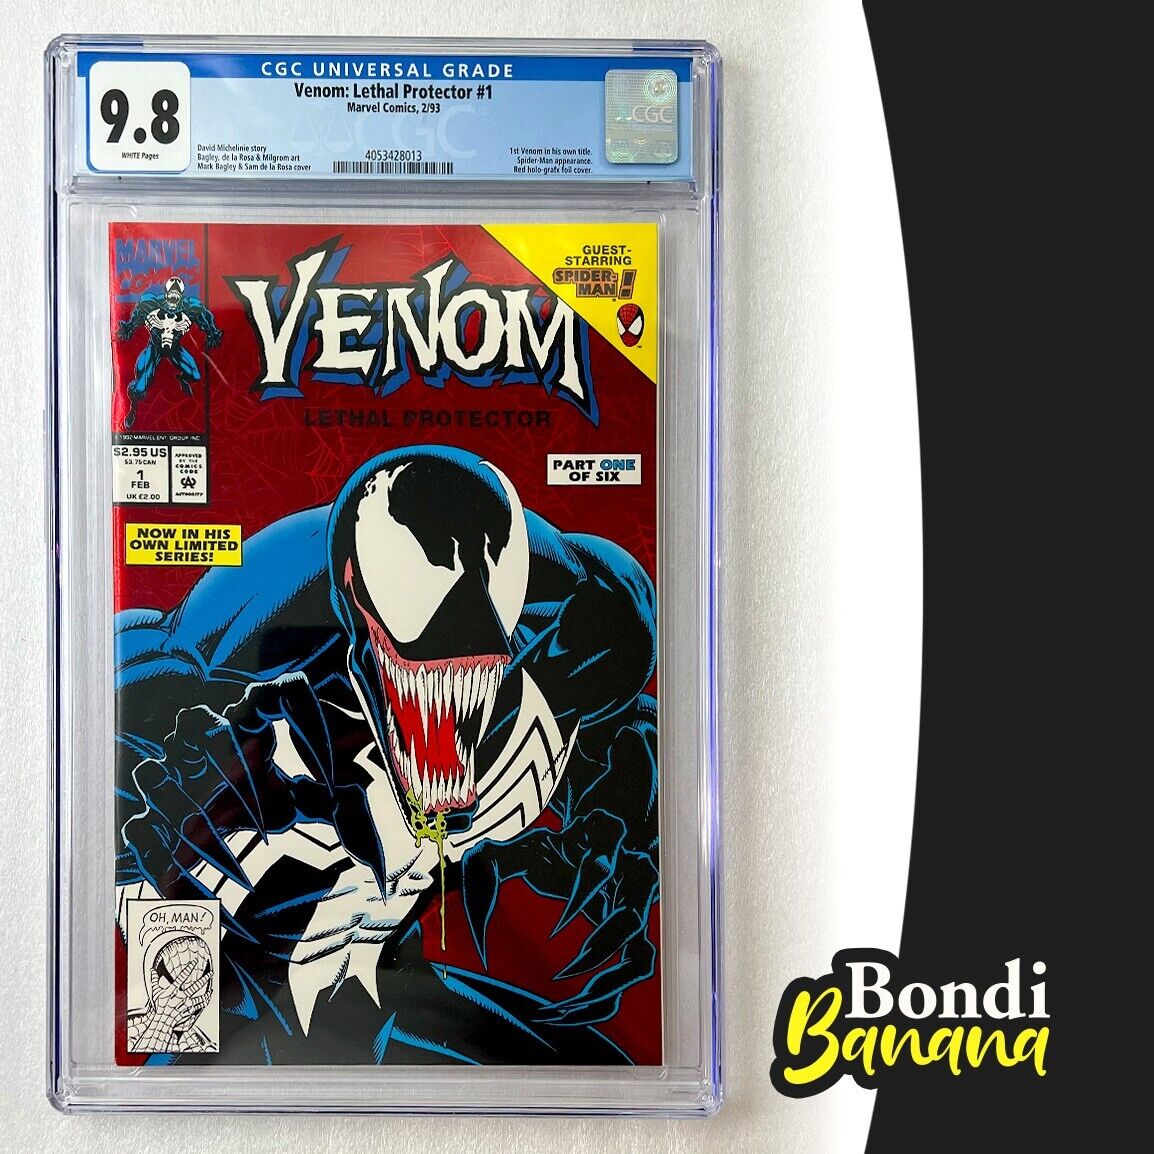 Marvel Comics Venom Lethal Protector Issue 1 Mark Bagley Art CGC 98 Key Comic